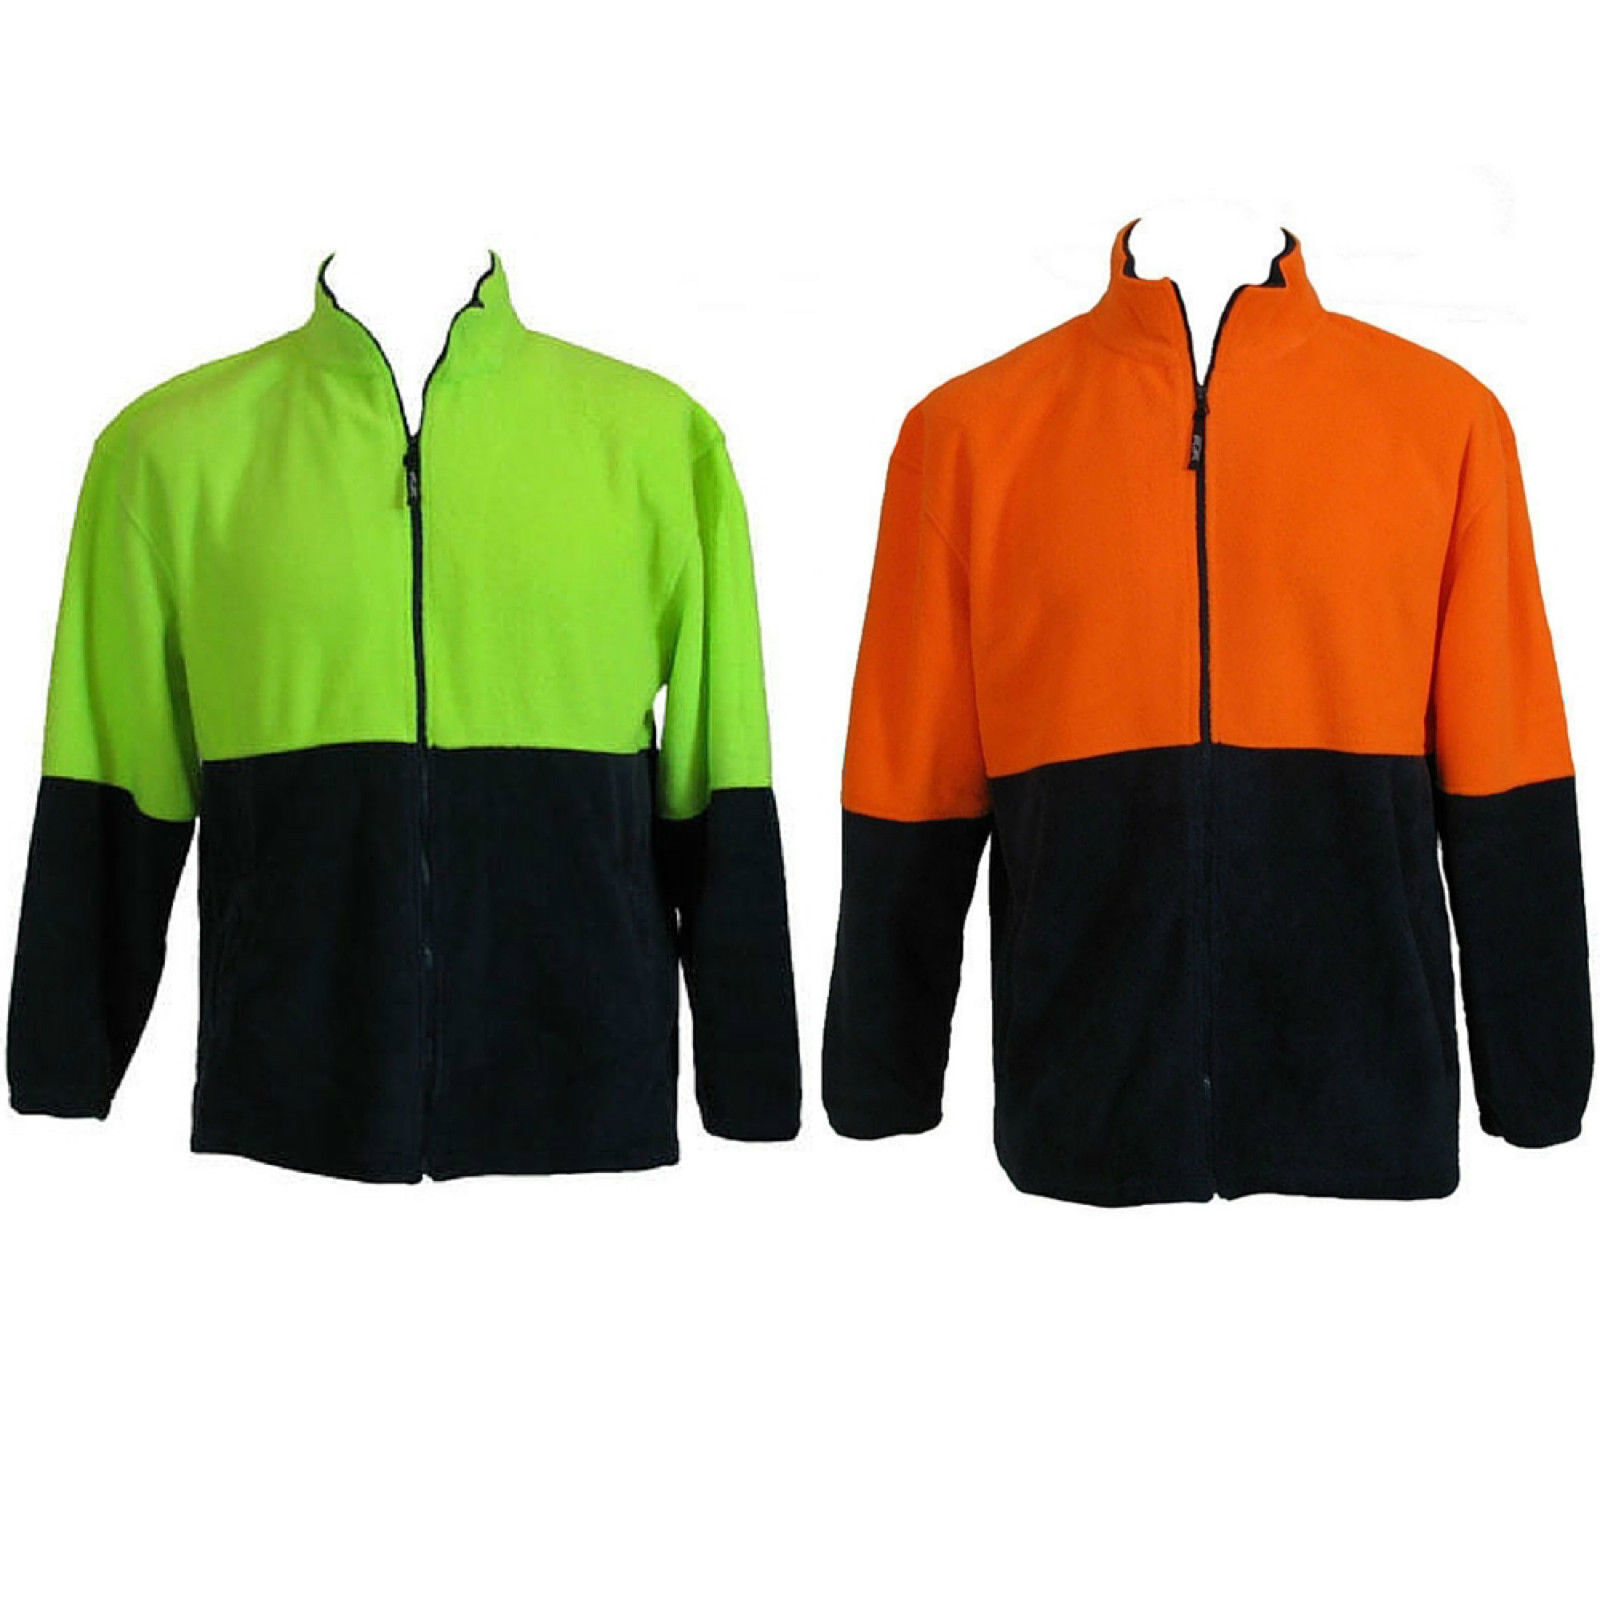 HI VIS POLAR FLEECE Jumper Full Zip Safety Workwear Fleecy Jacket Unisex - Orange - 5XL